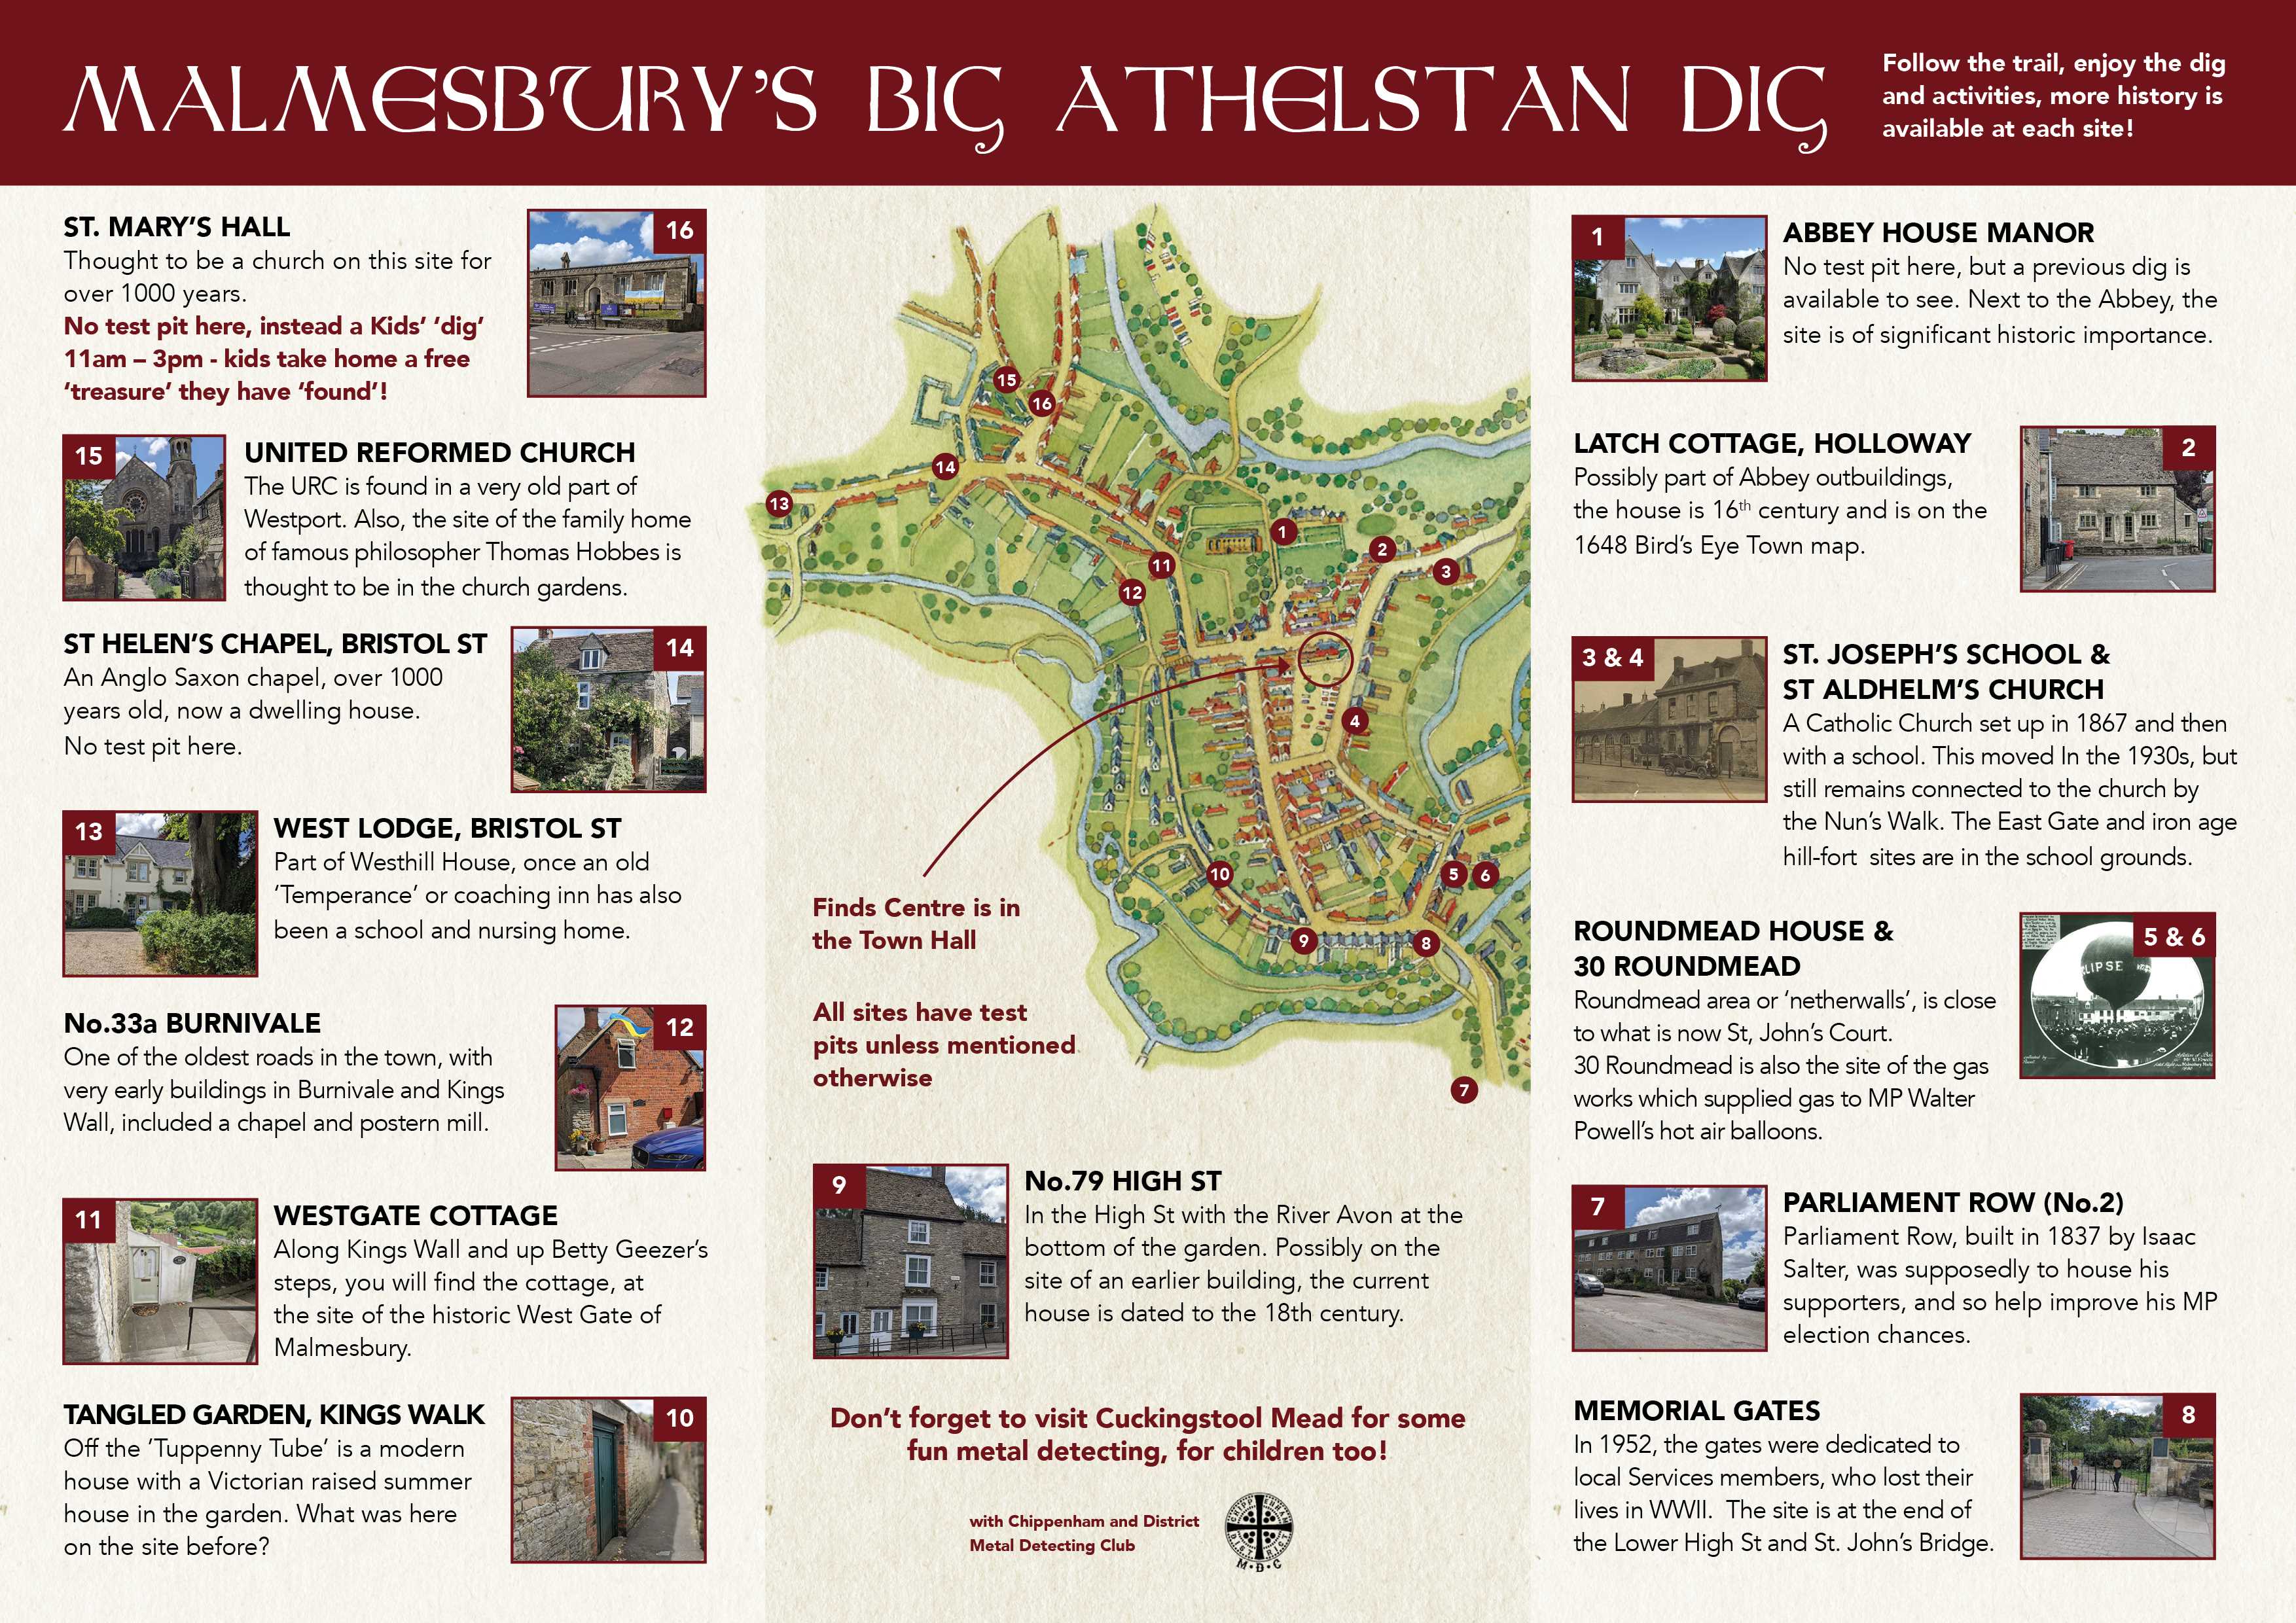 Malmesbury's Big Athelstan Dig Sites Revealed